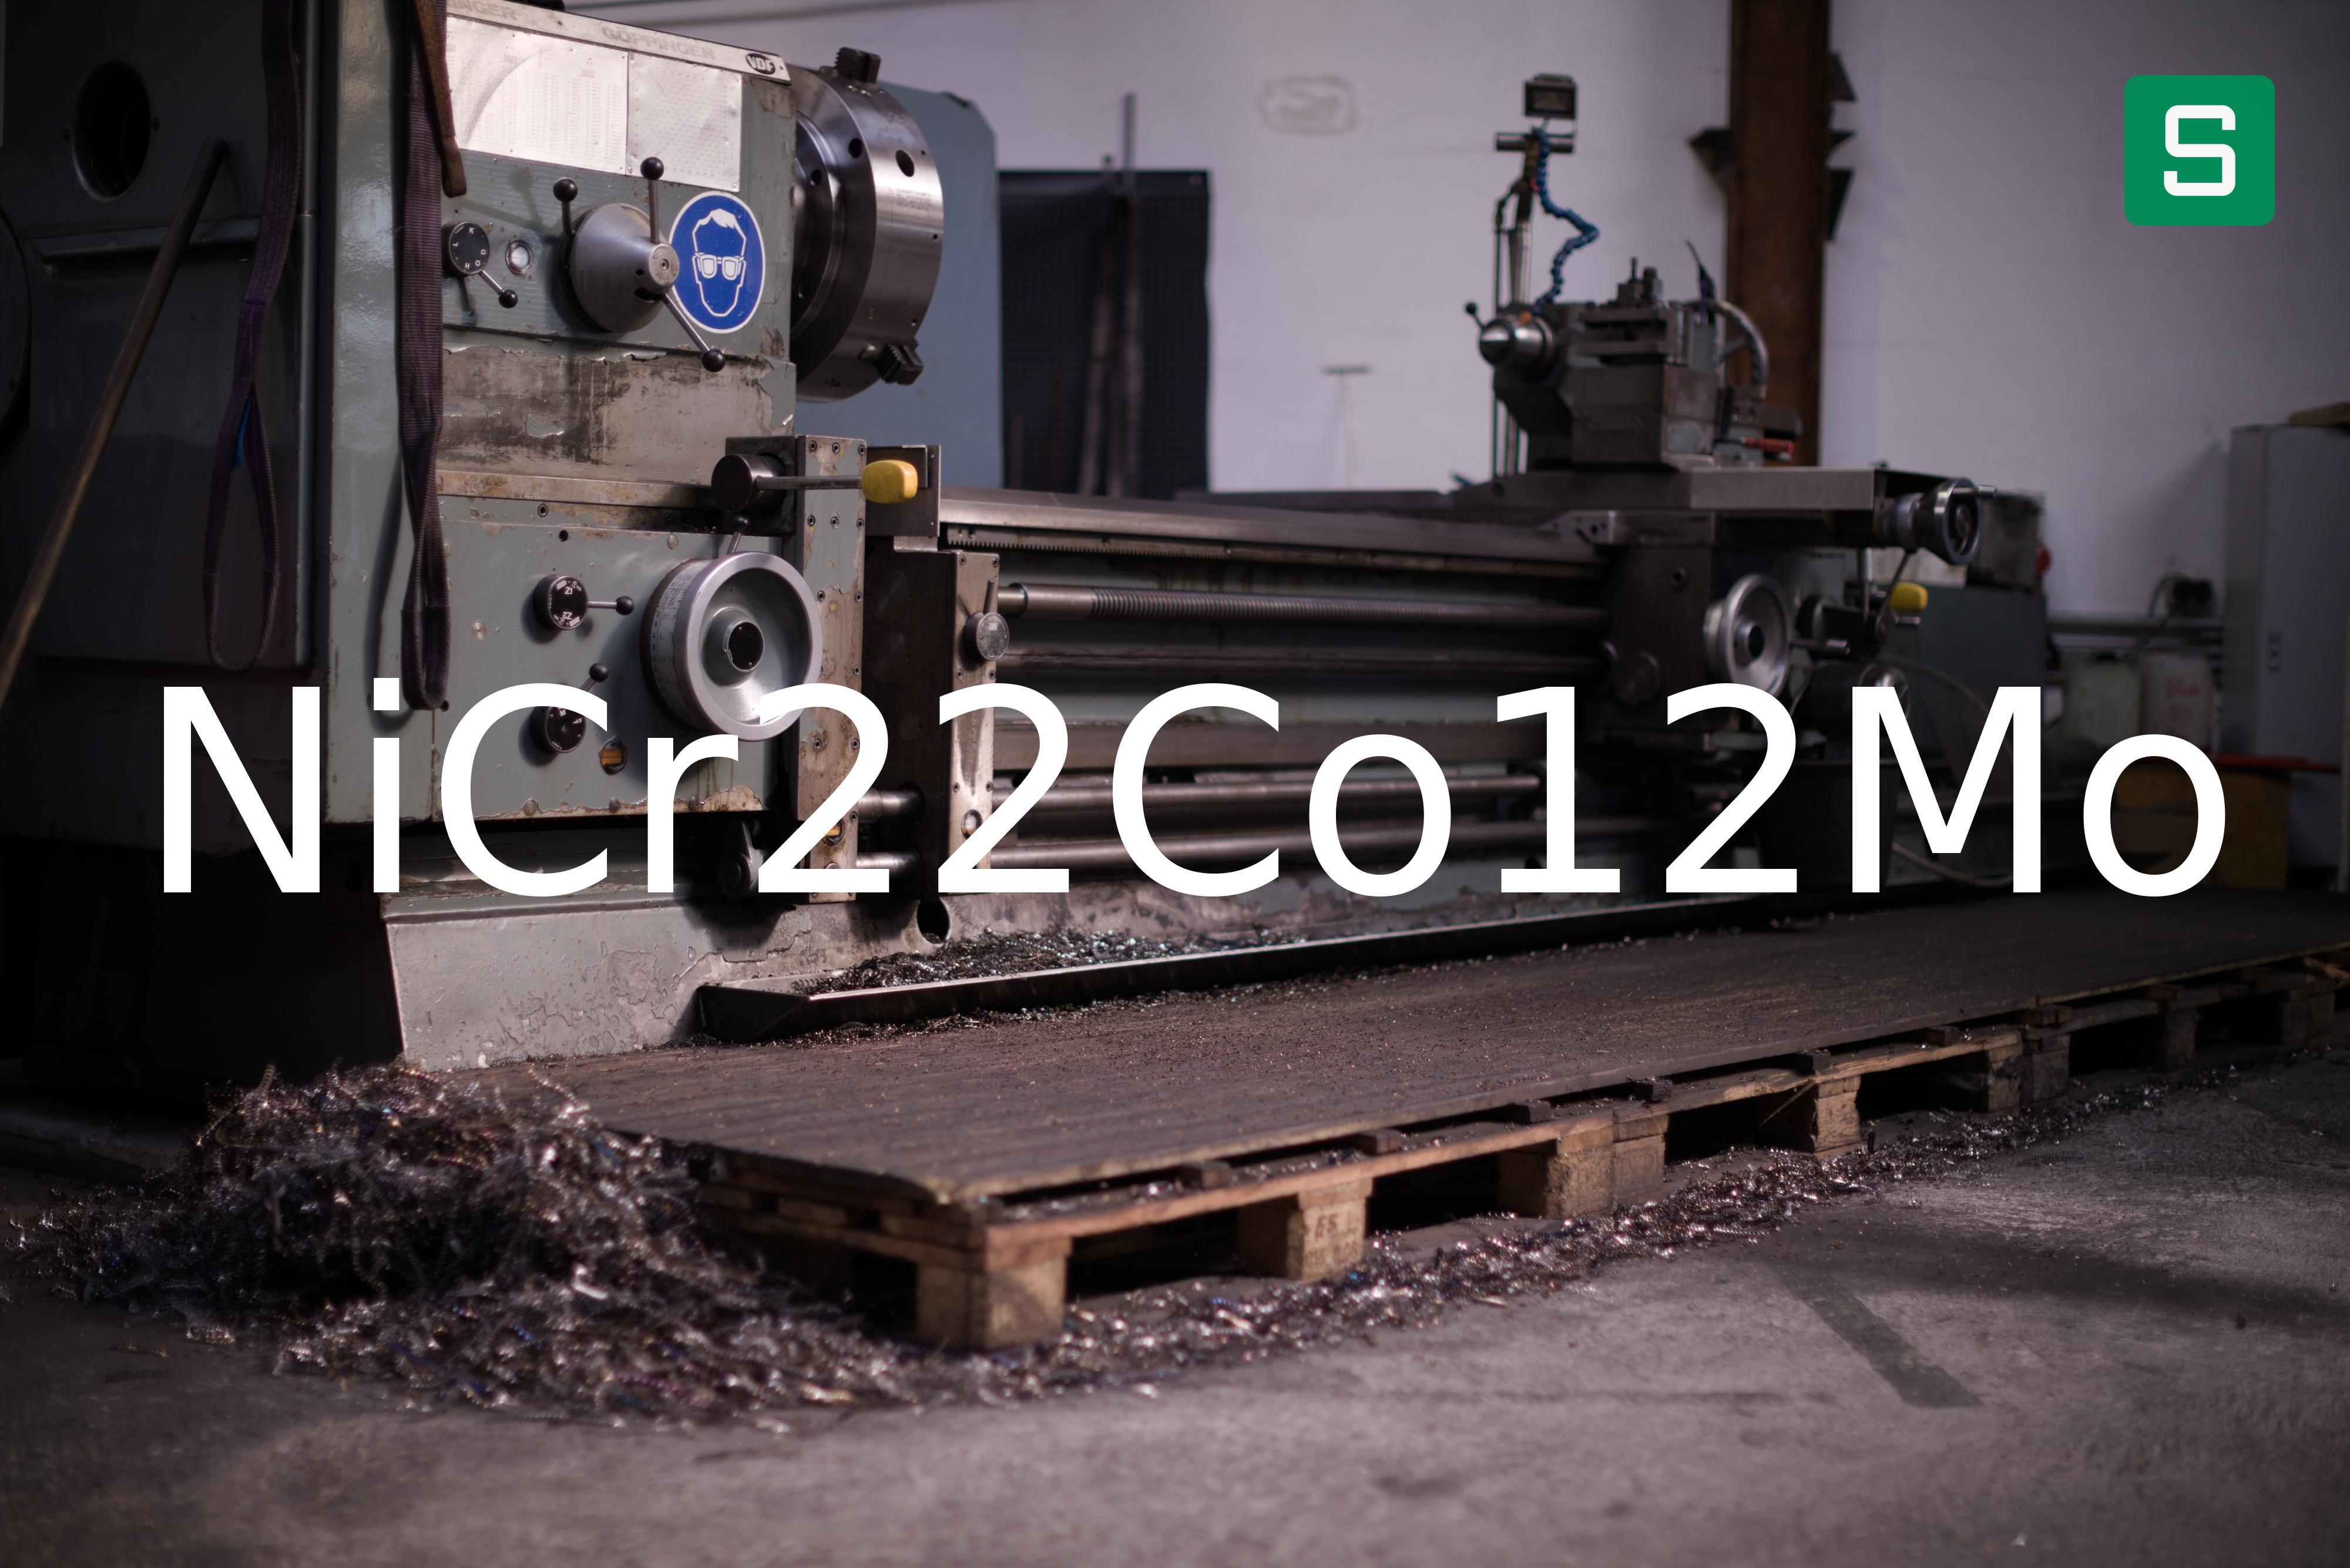 Stahlwerkstoff: NiCr22Co12Mo